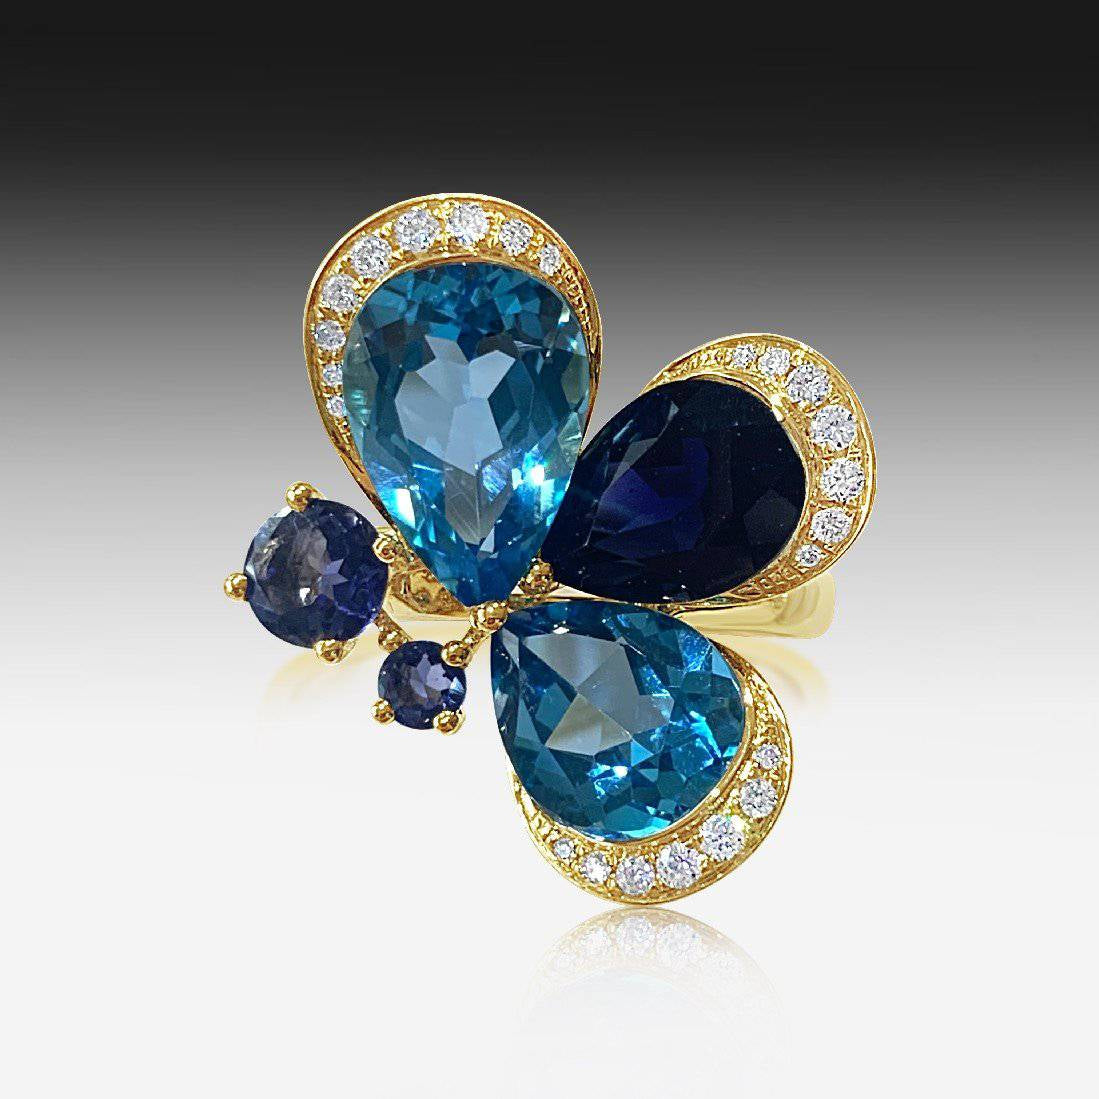 18kt Yellow Gold floral design Blue Topaz and Iolite diamond ring - Masterpiece Jewellery Opal & Gems Sydney Australia | Online Shop